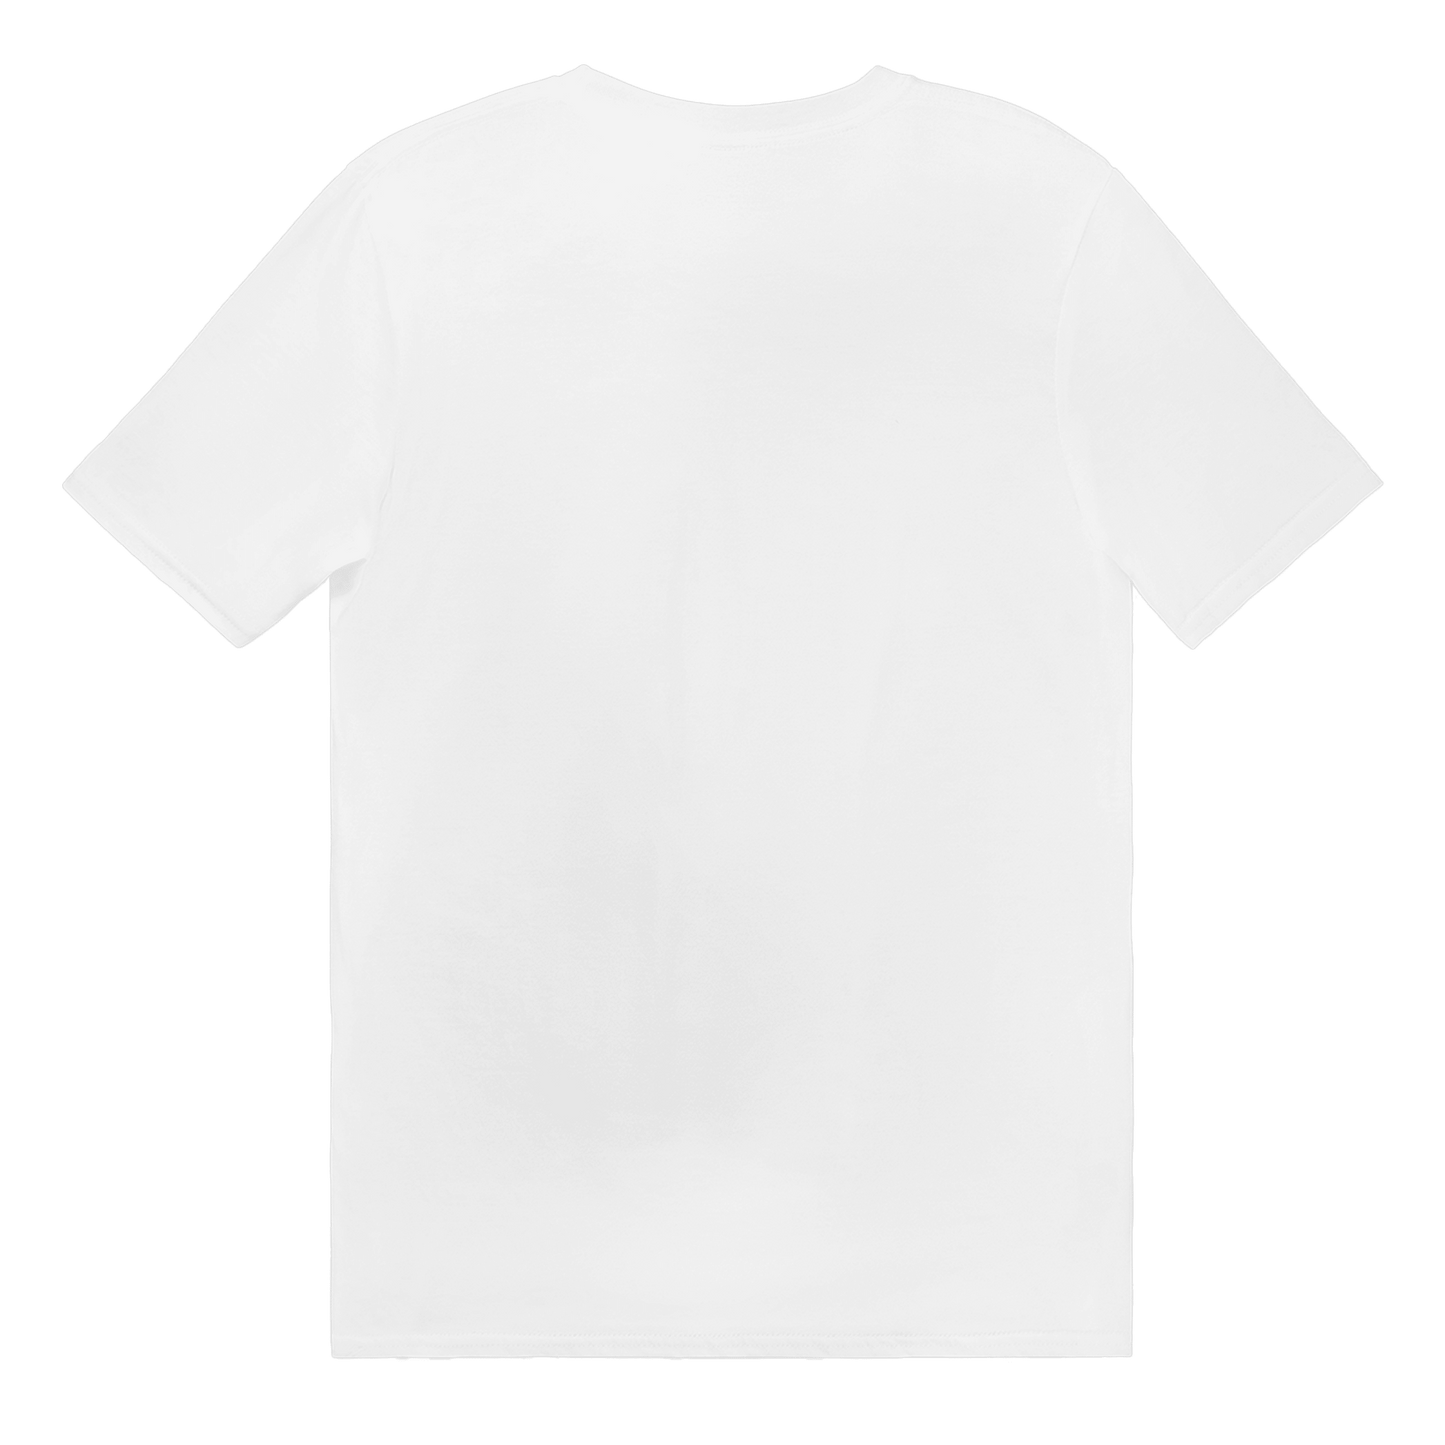 Prinskorv - T-shirt 